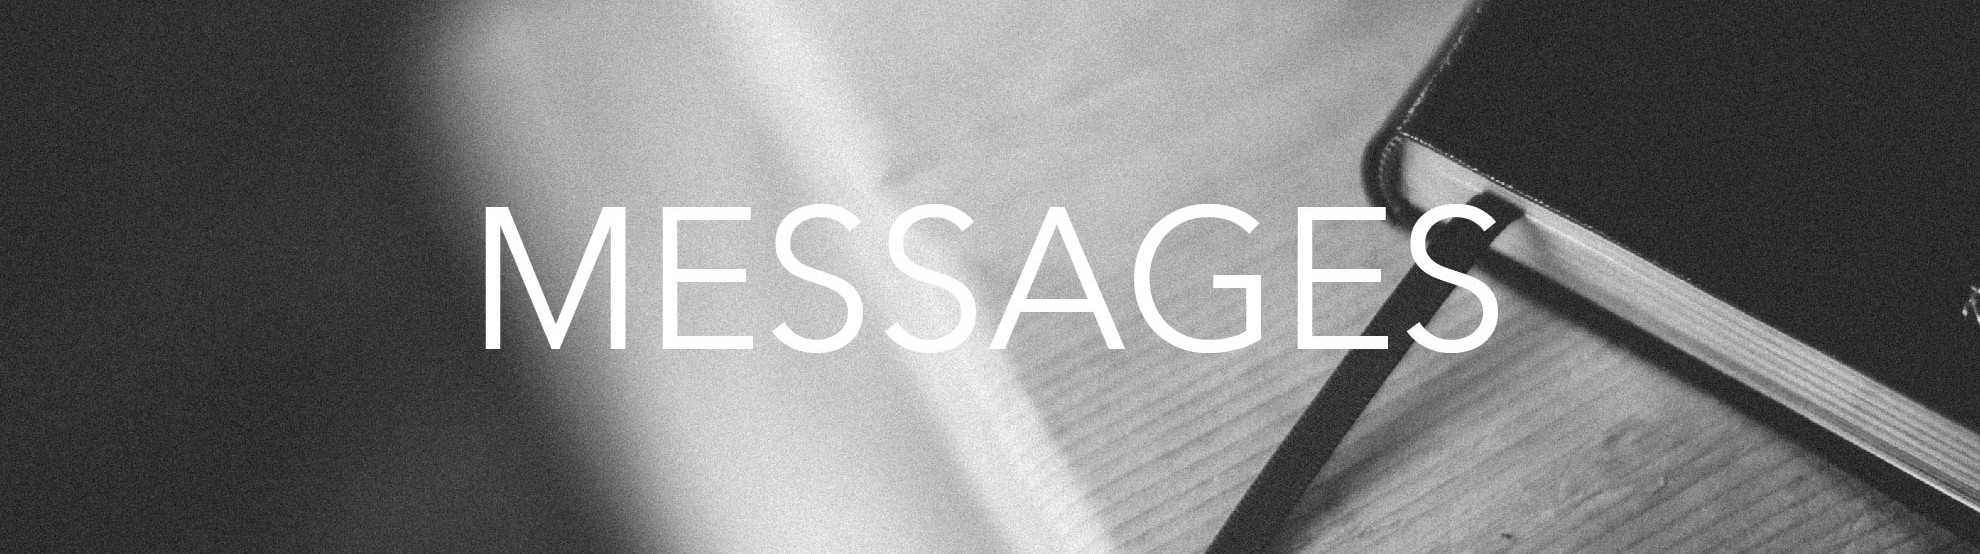 mesages website-01